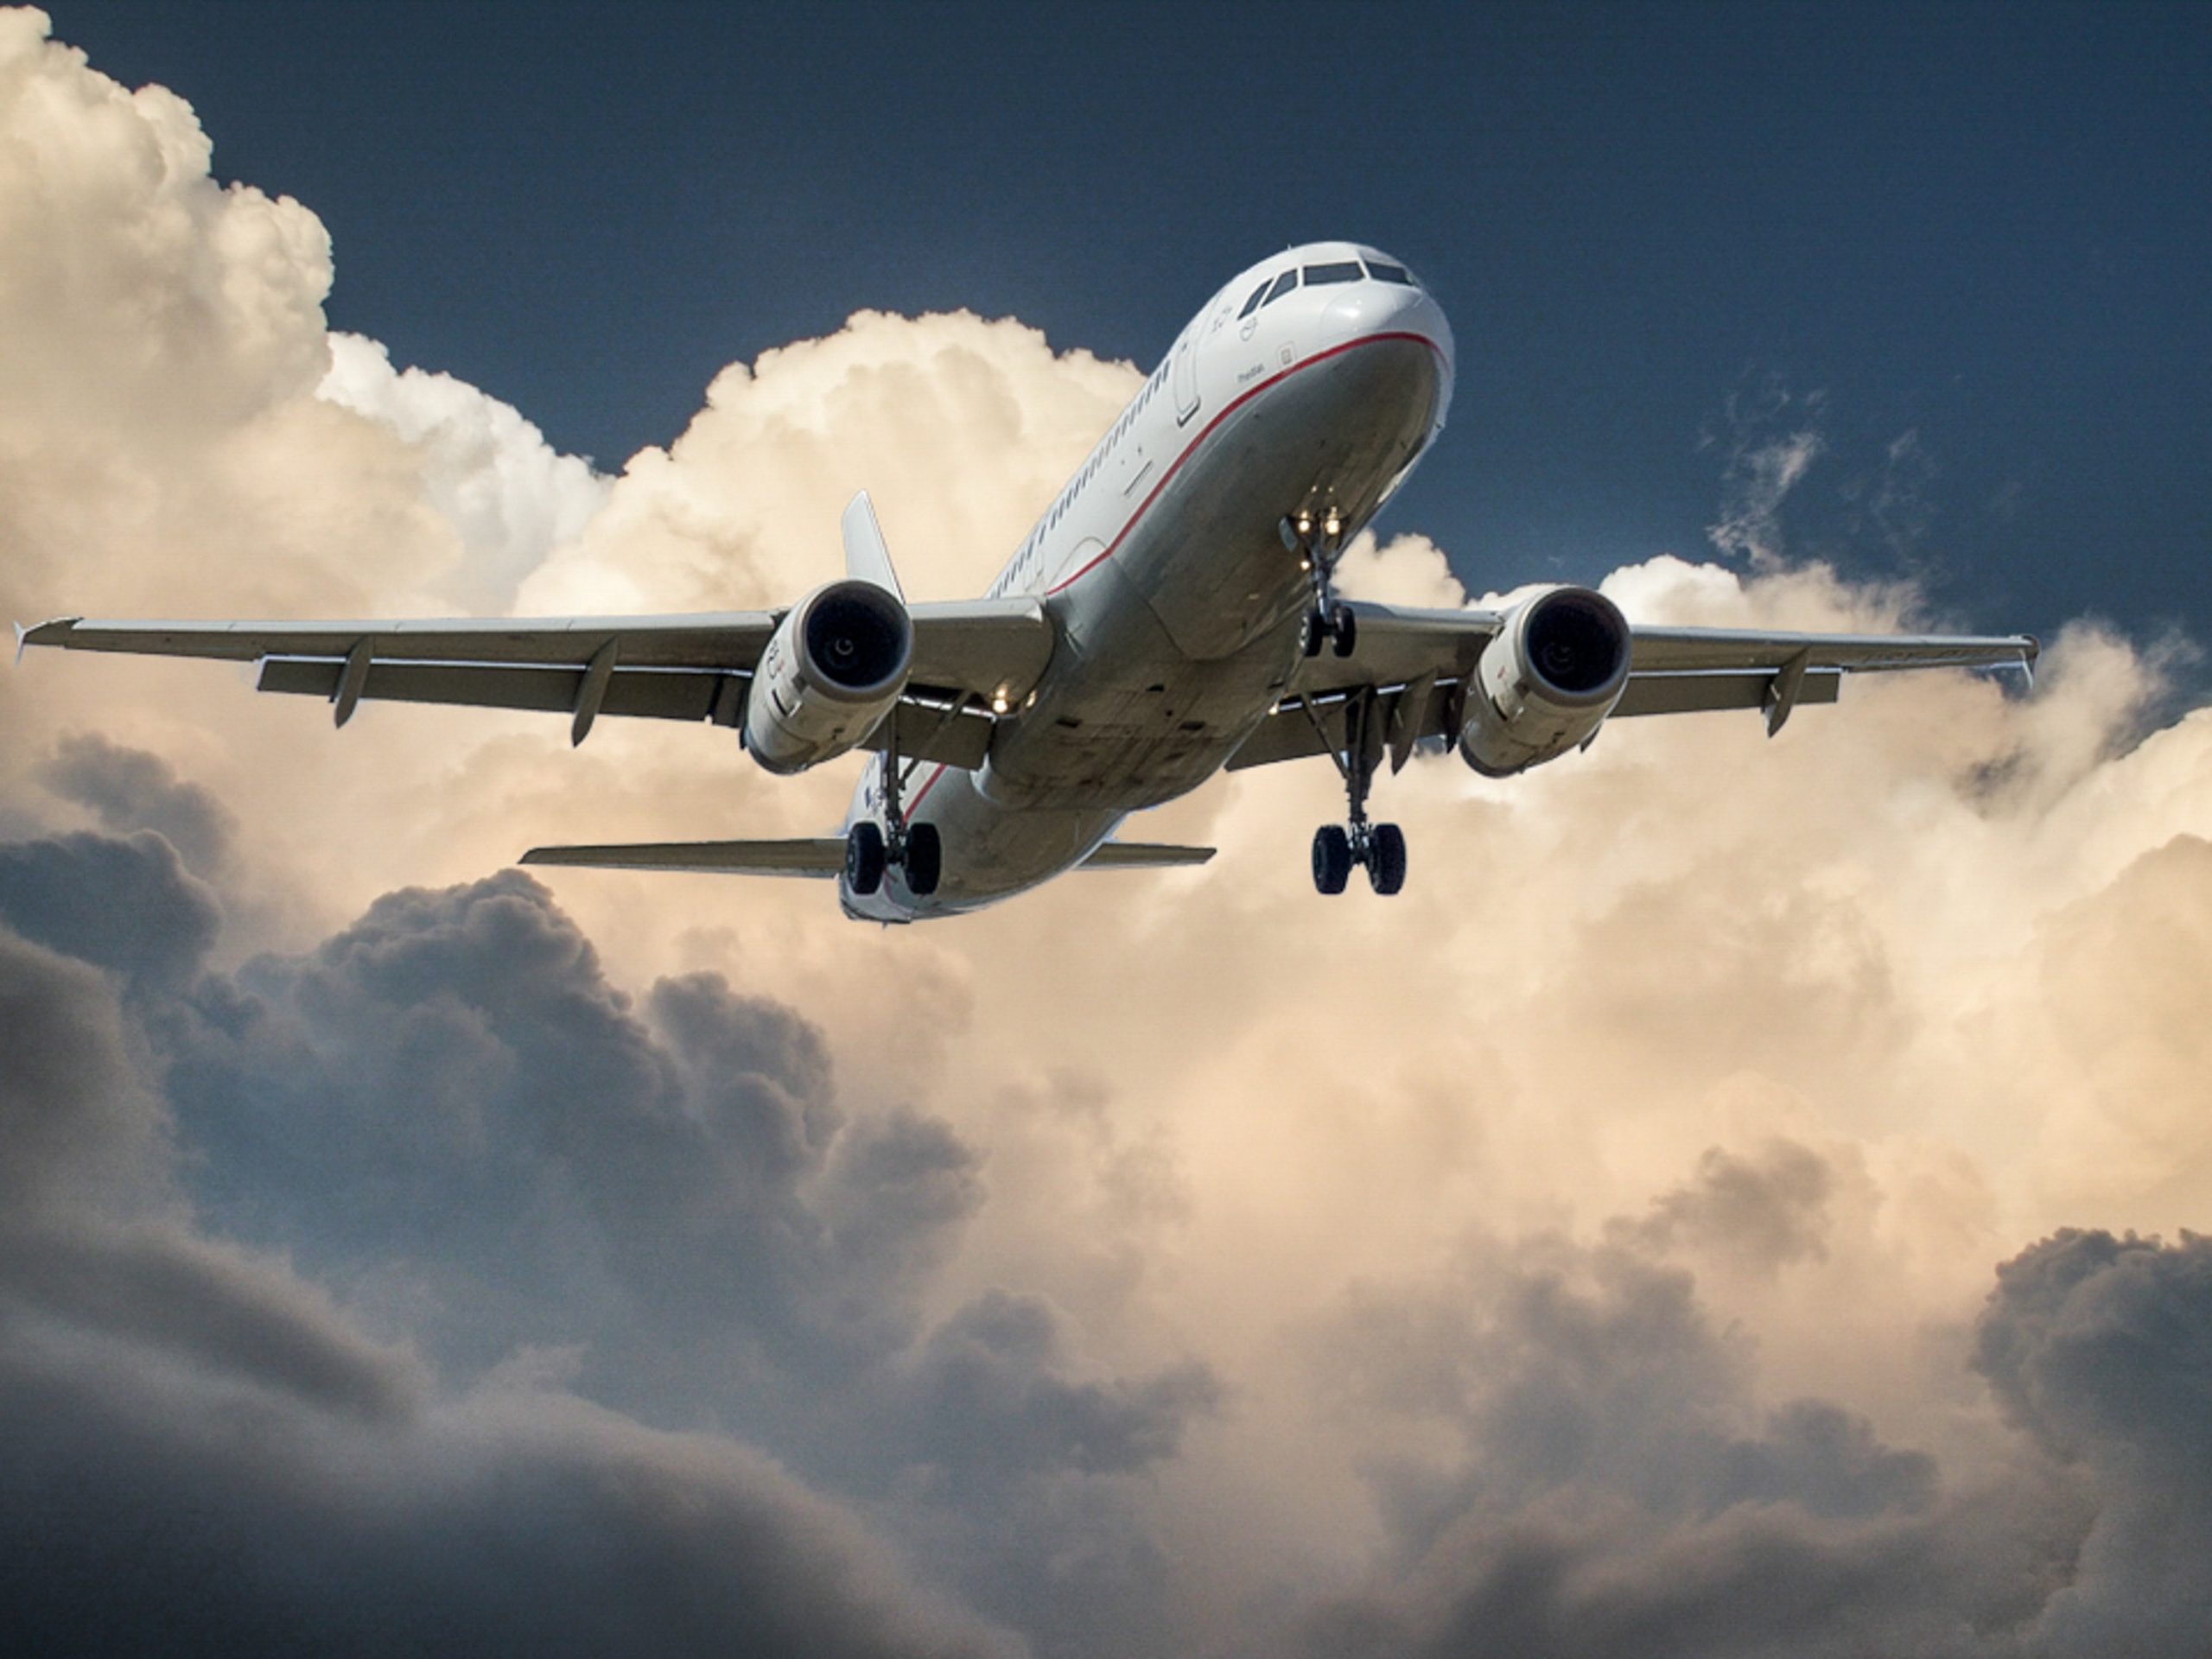 Looming WestJet strike illustrates the lasting impact deregulation has had  on the aviation industry